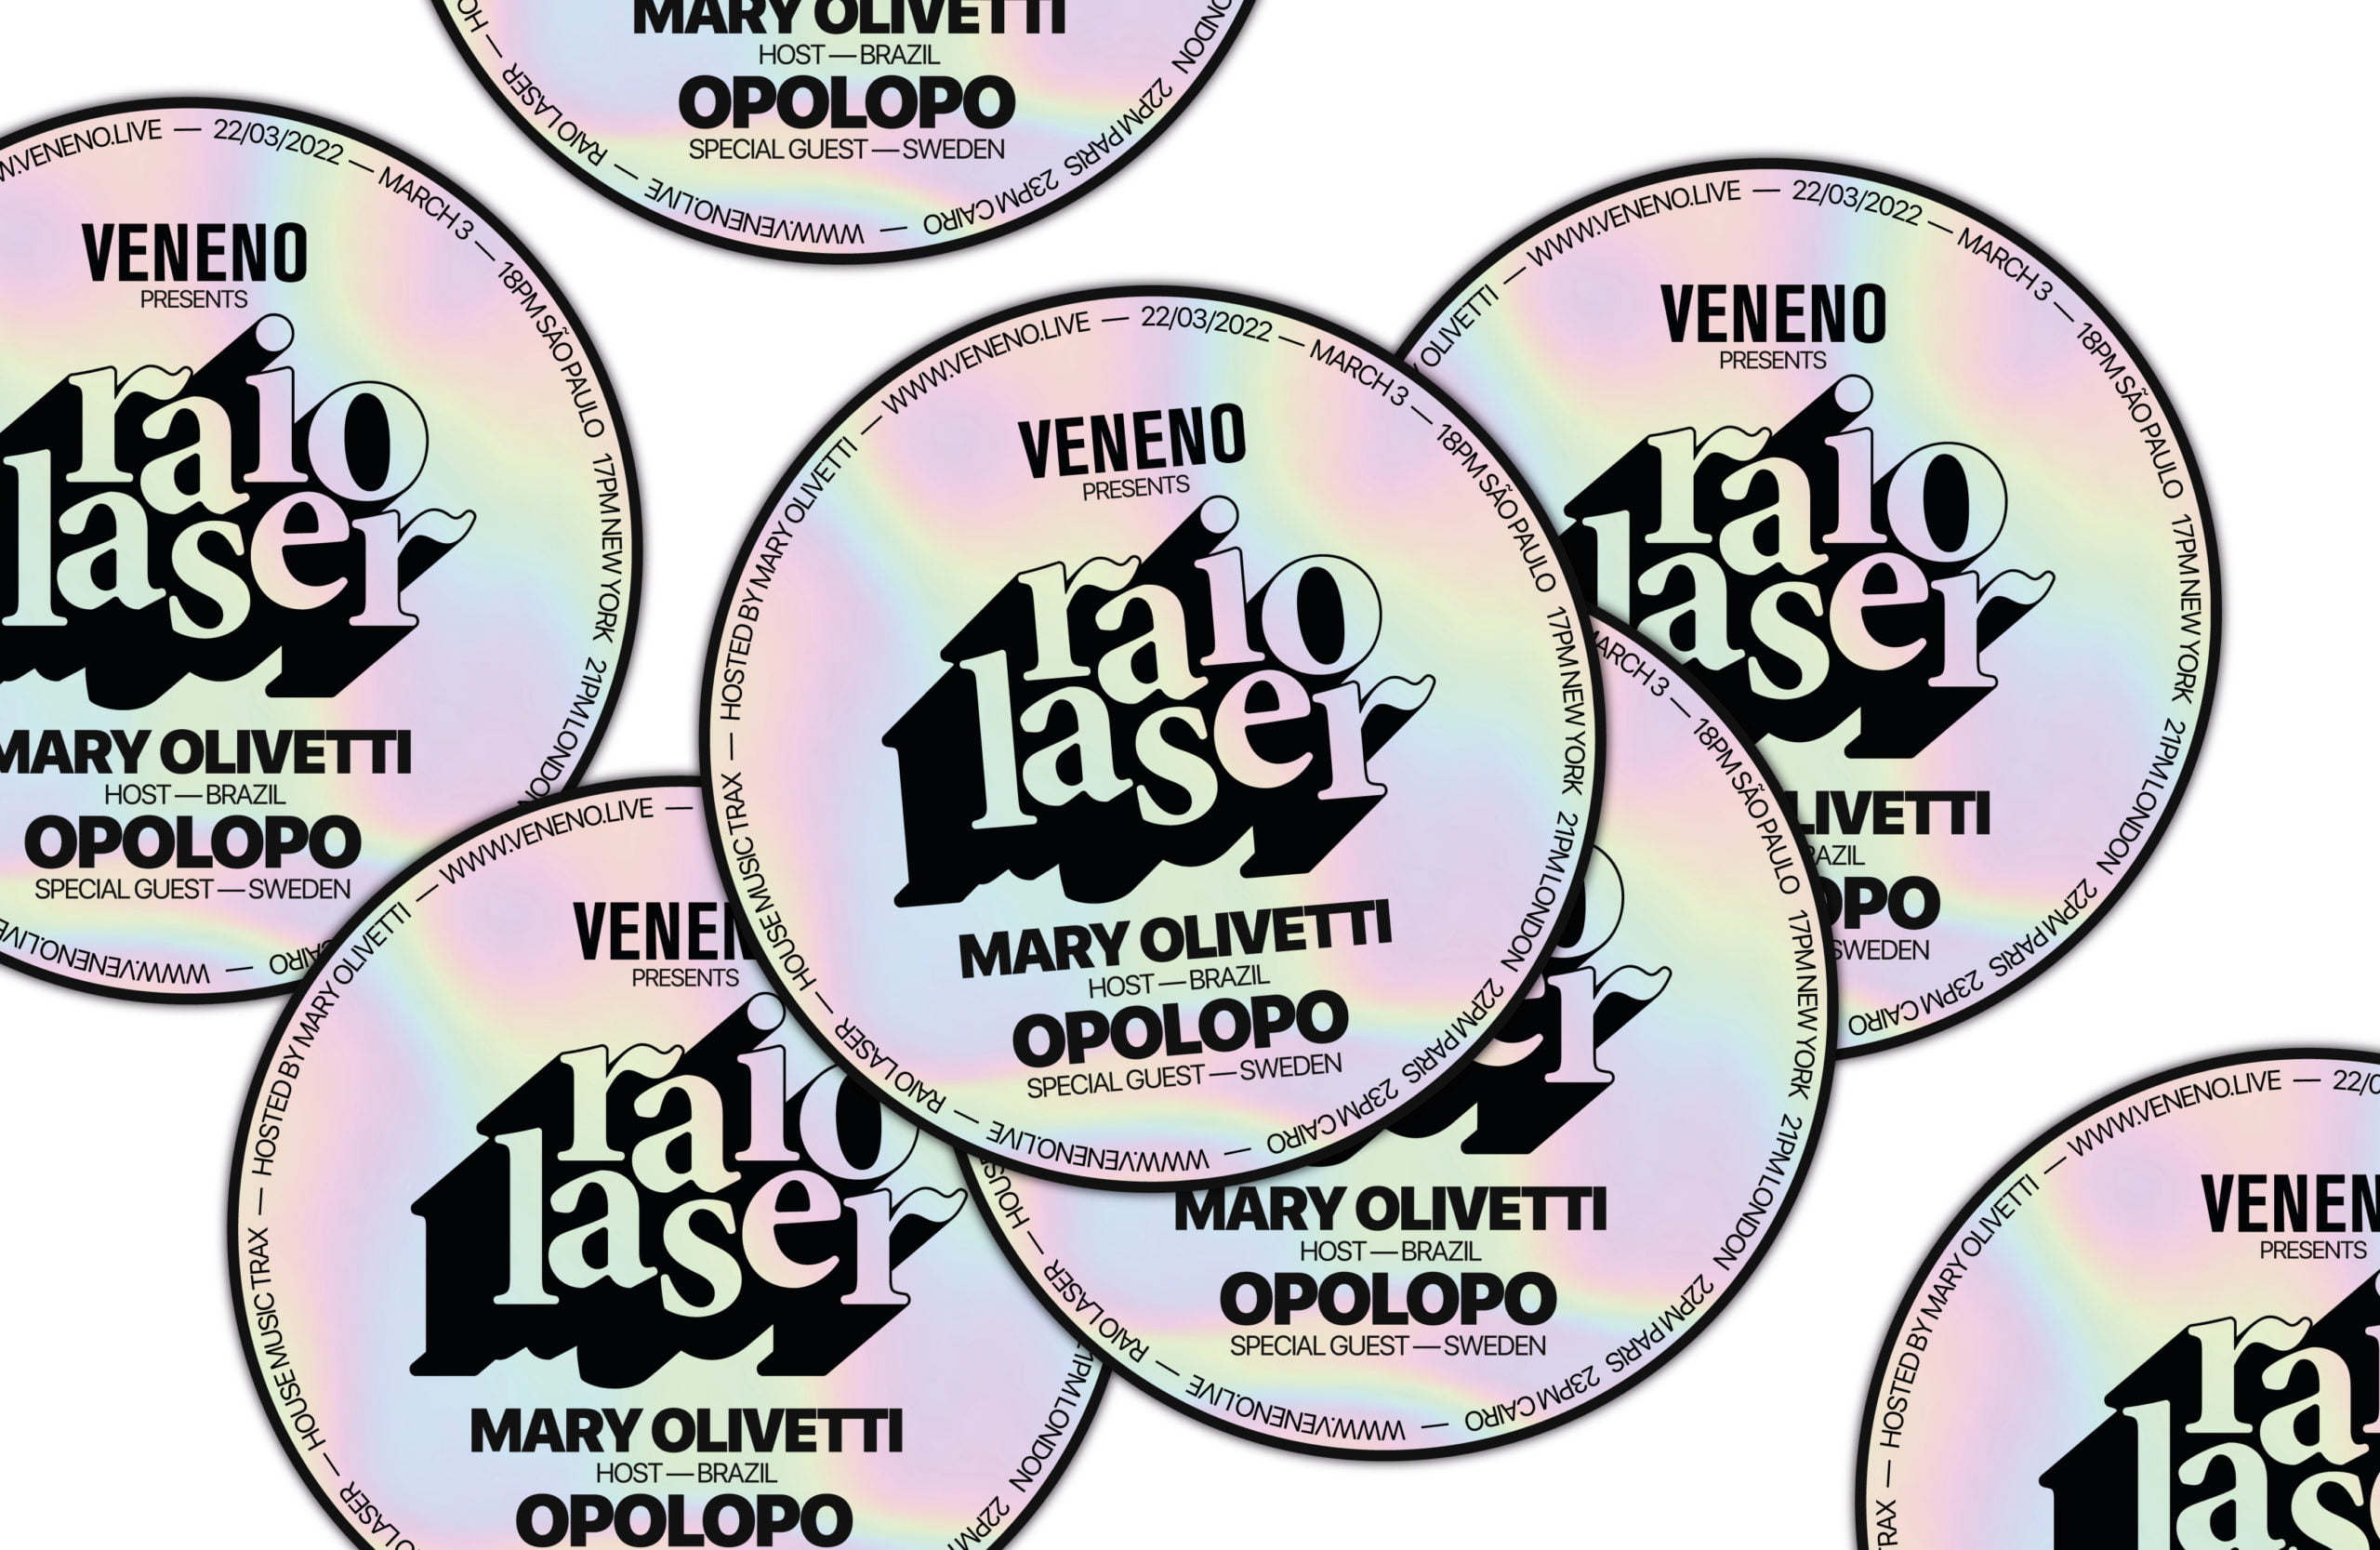 Mary Olivetti & Opolopo